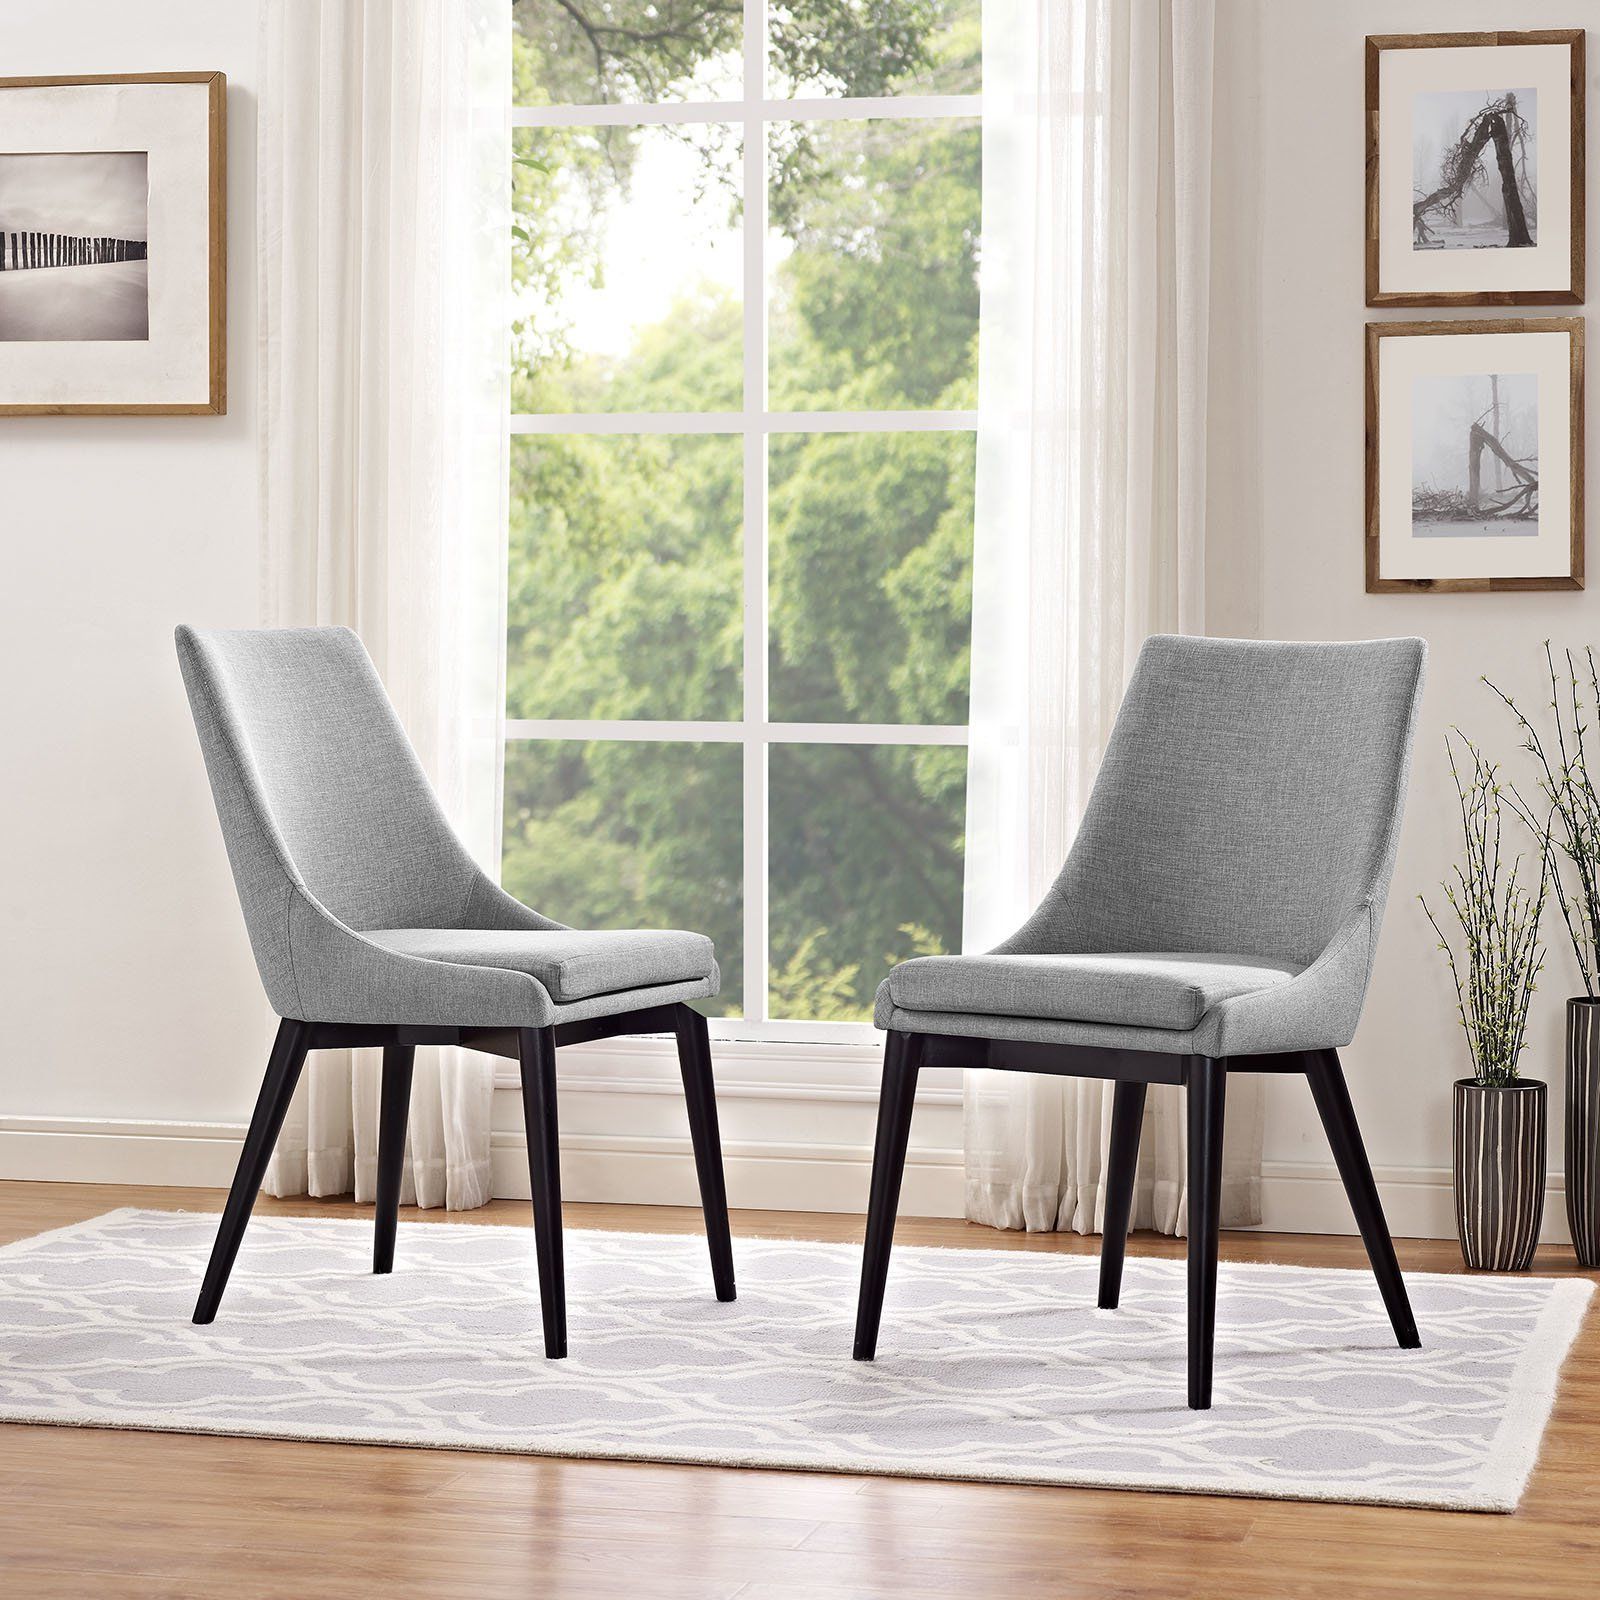 Most Recent Corrigan Studio Carlton Wood Leg Upholstered Dining Chair Within Carlton Wood Leg Upholstered Dining Chairs (View 3 of 20)